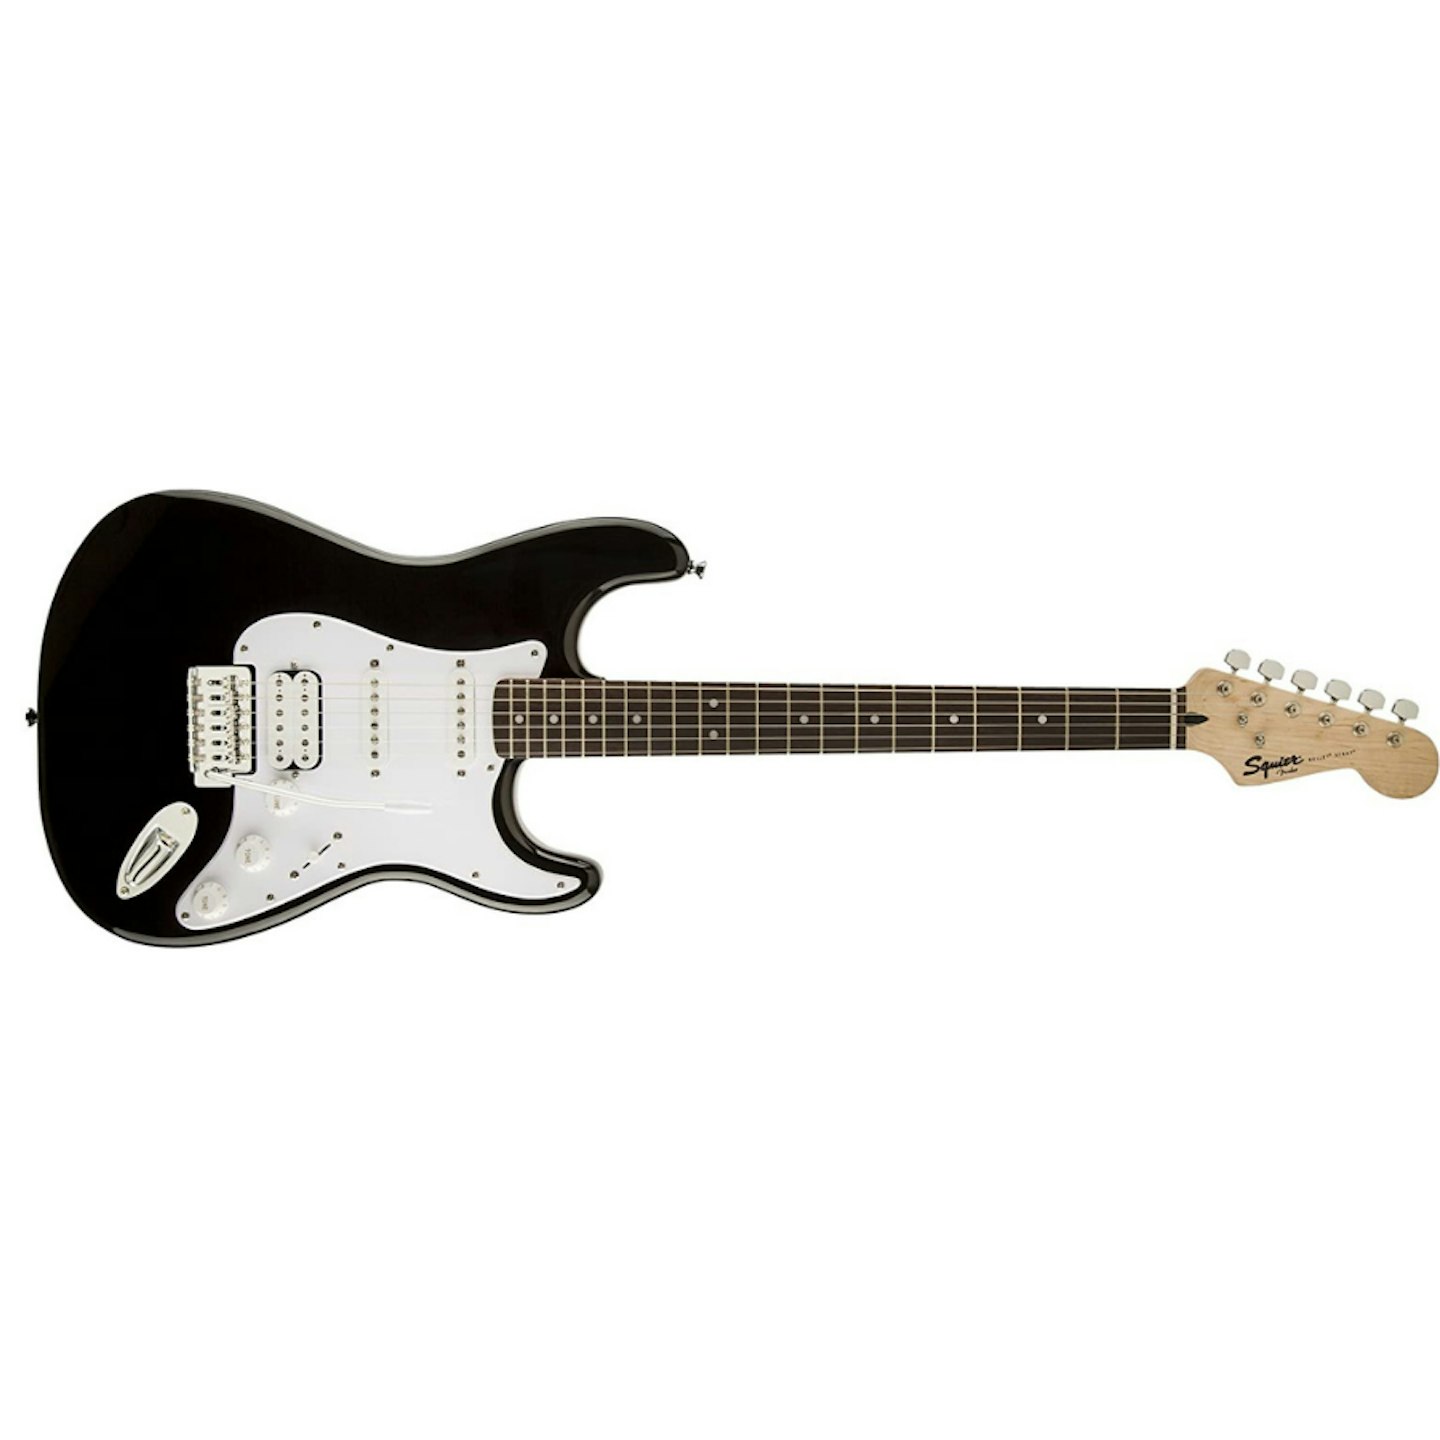 Squier Bullet Stratocaster Tremolo HSS Electric Guitar